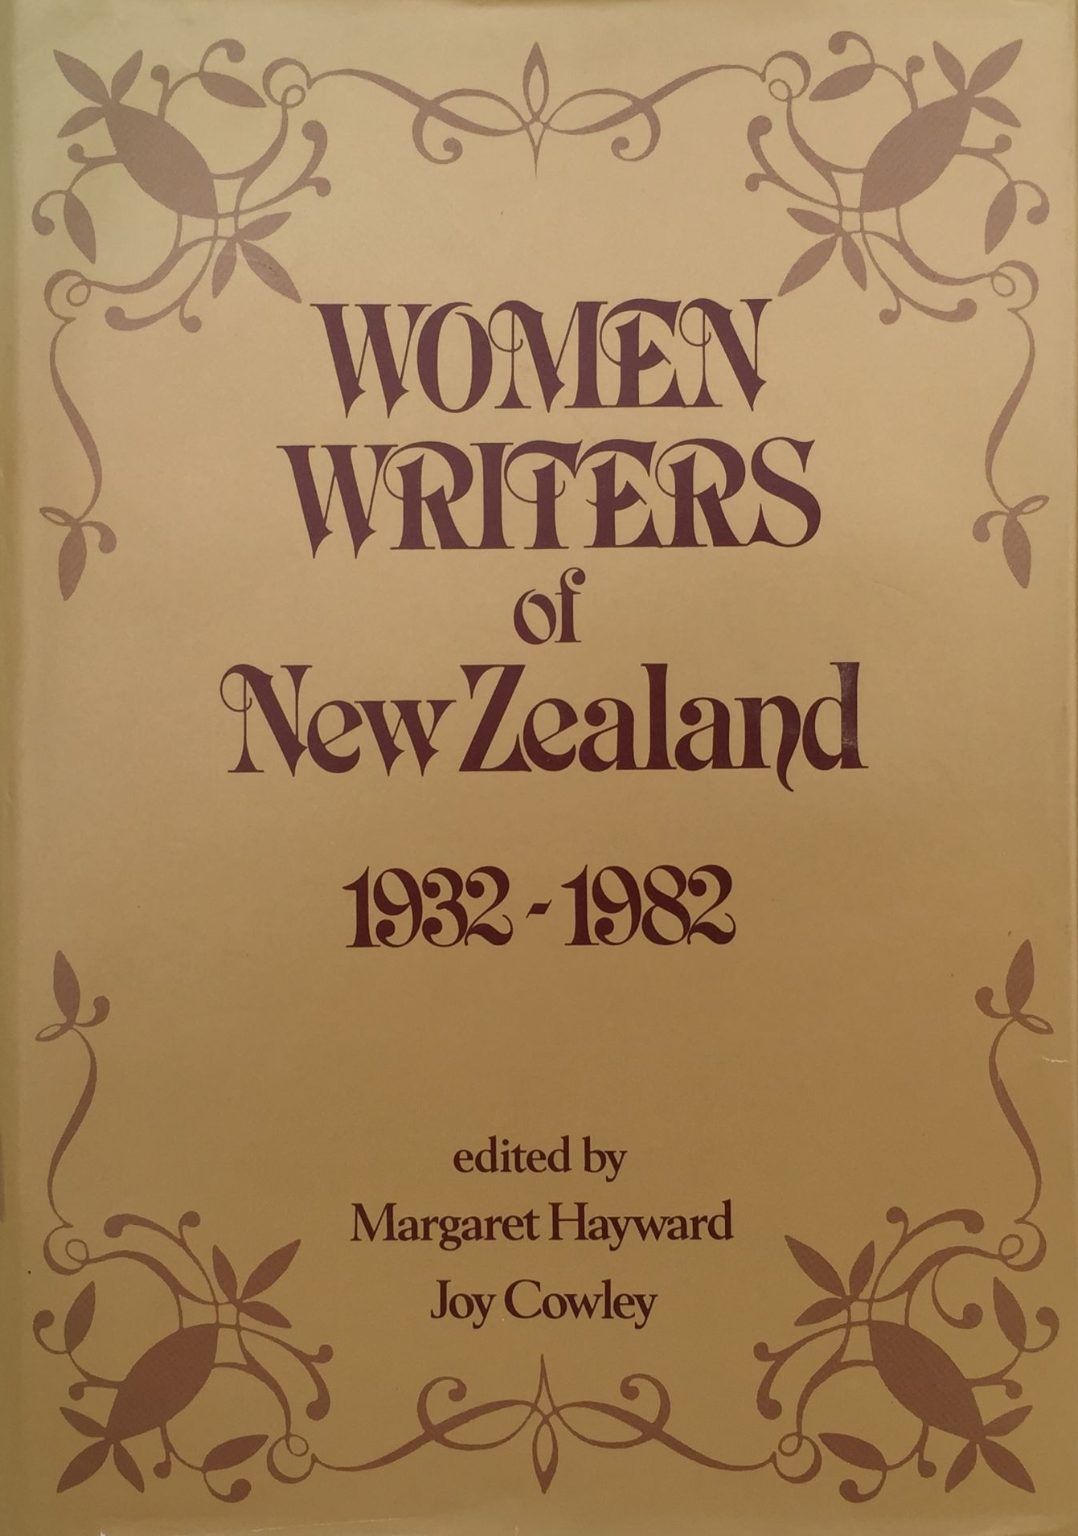 WOMEN WRITERS OF NEW ZEALAND 1932-1982